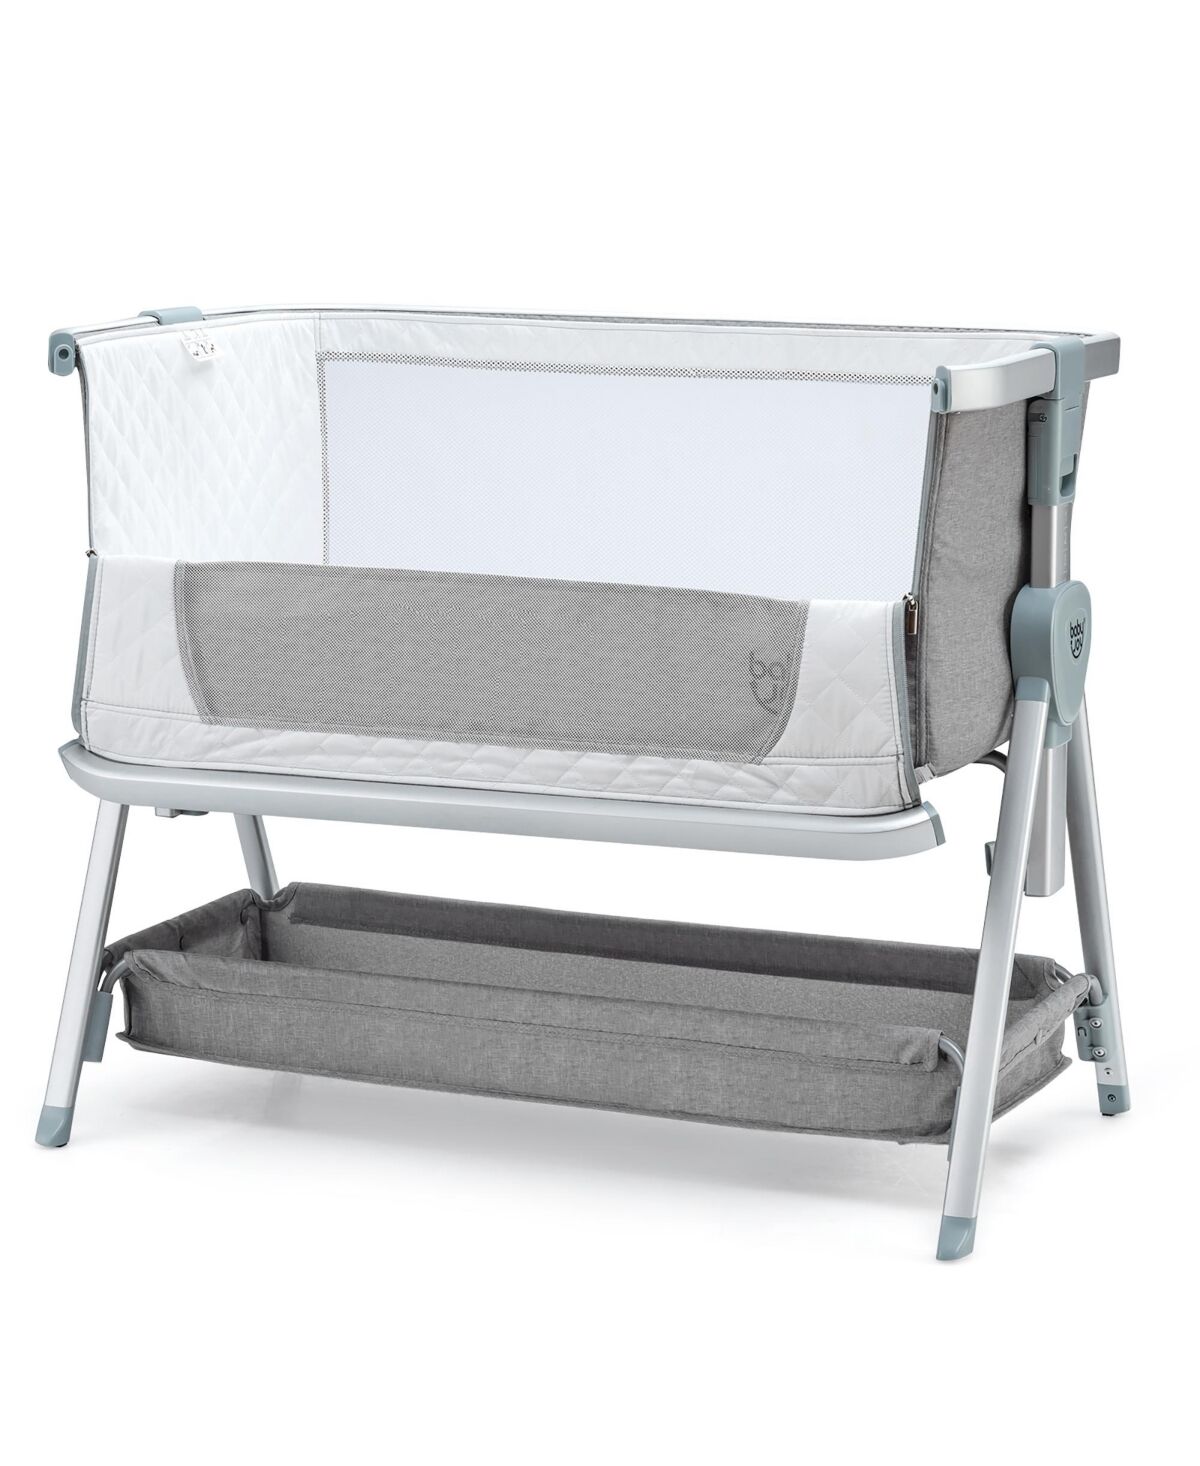 Costway Baby Bed Side Crib Portable Adjustable Infant Travel Sleeper Bassinet - Grey